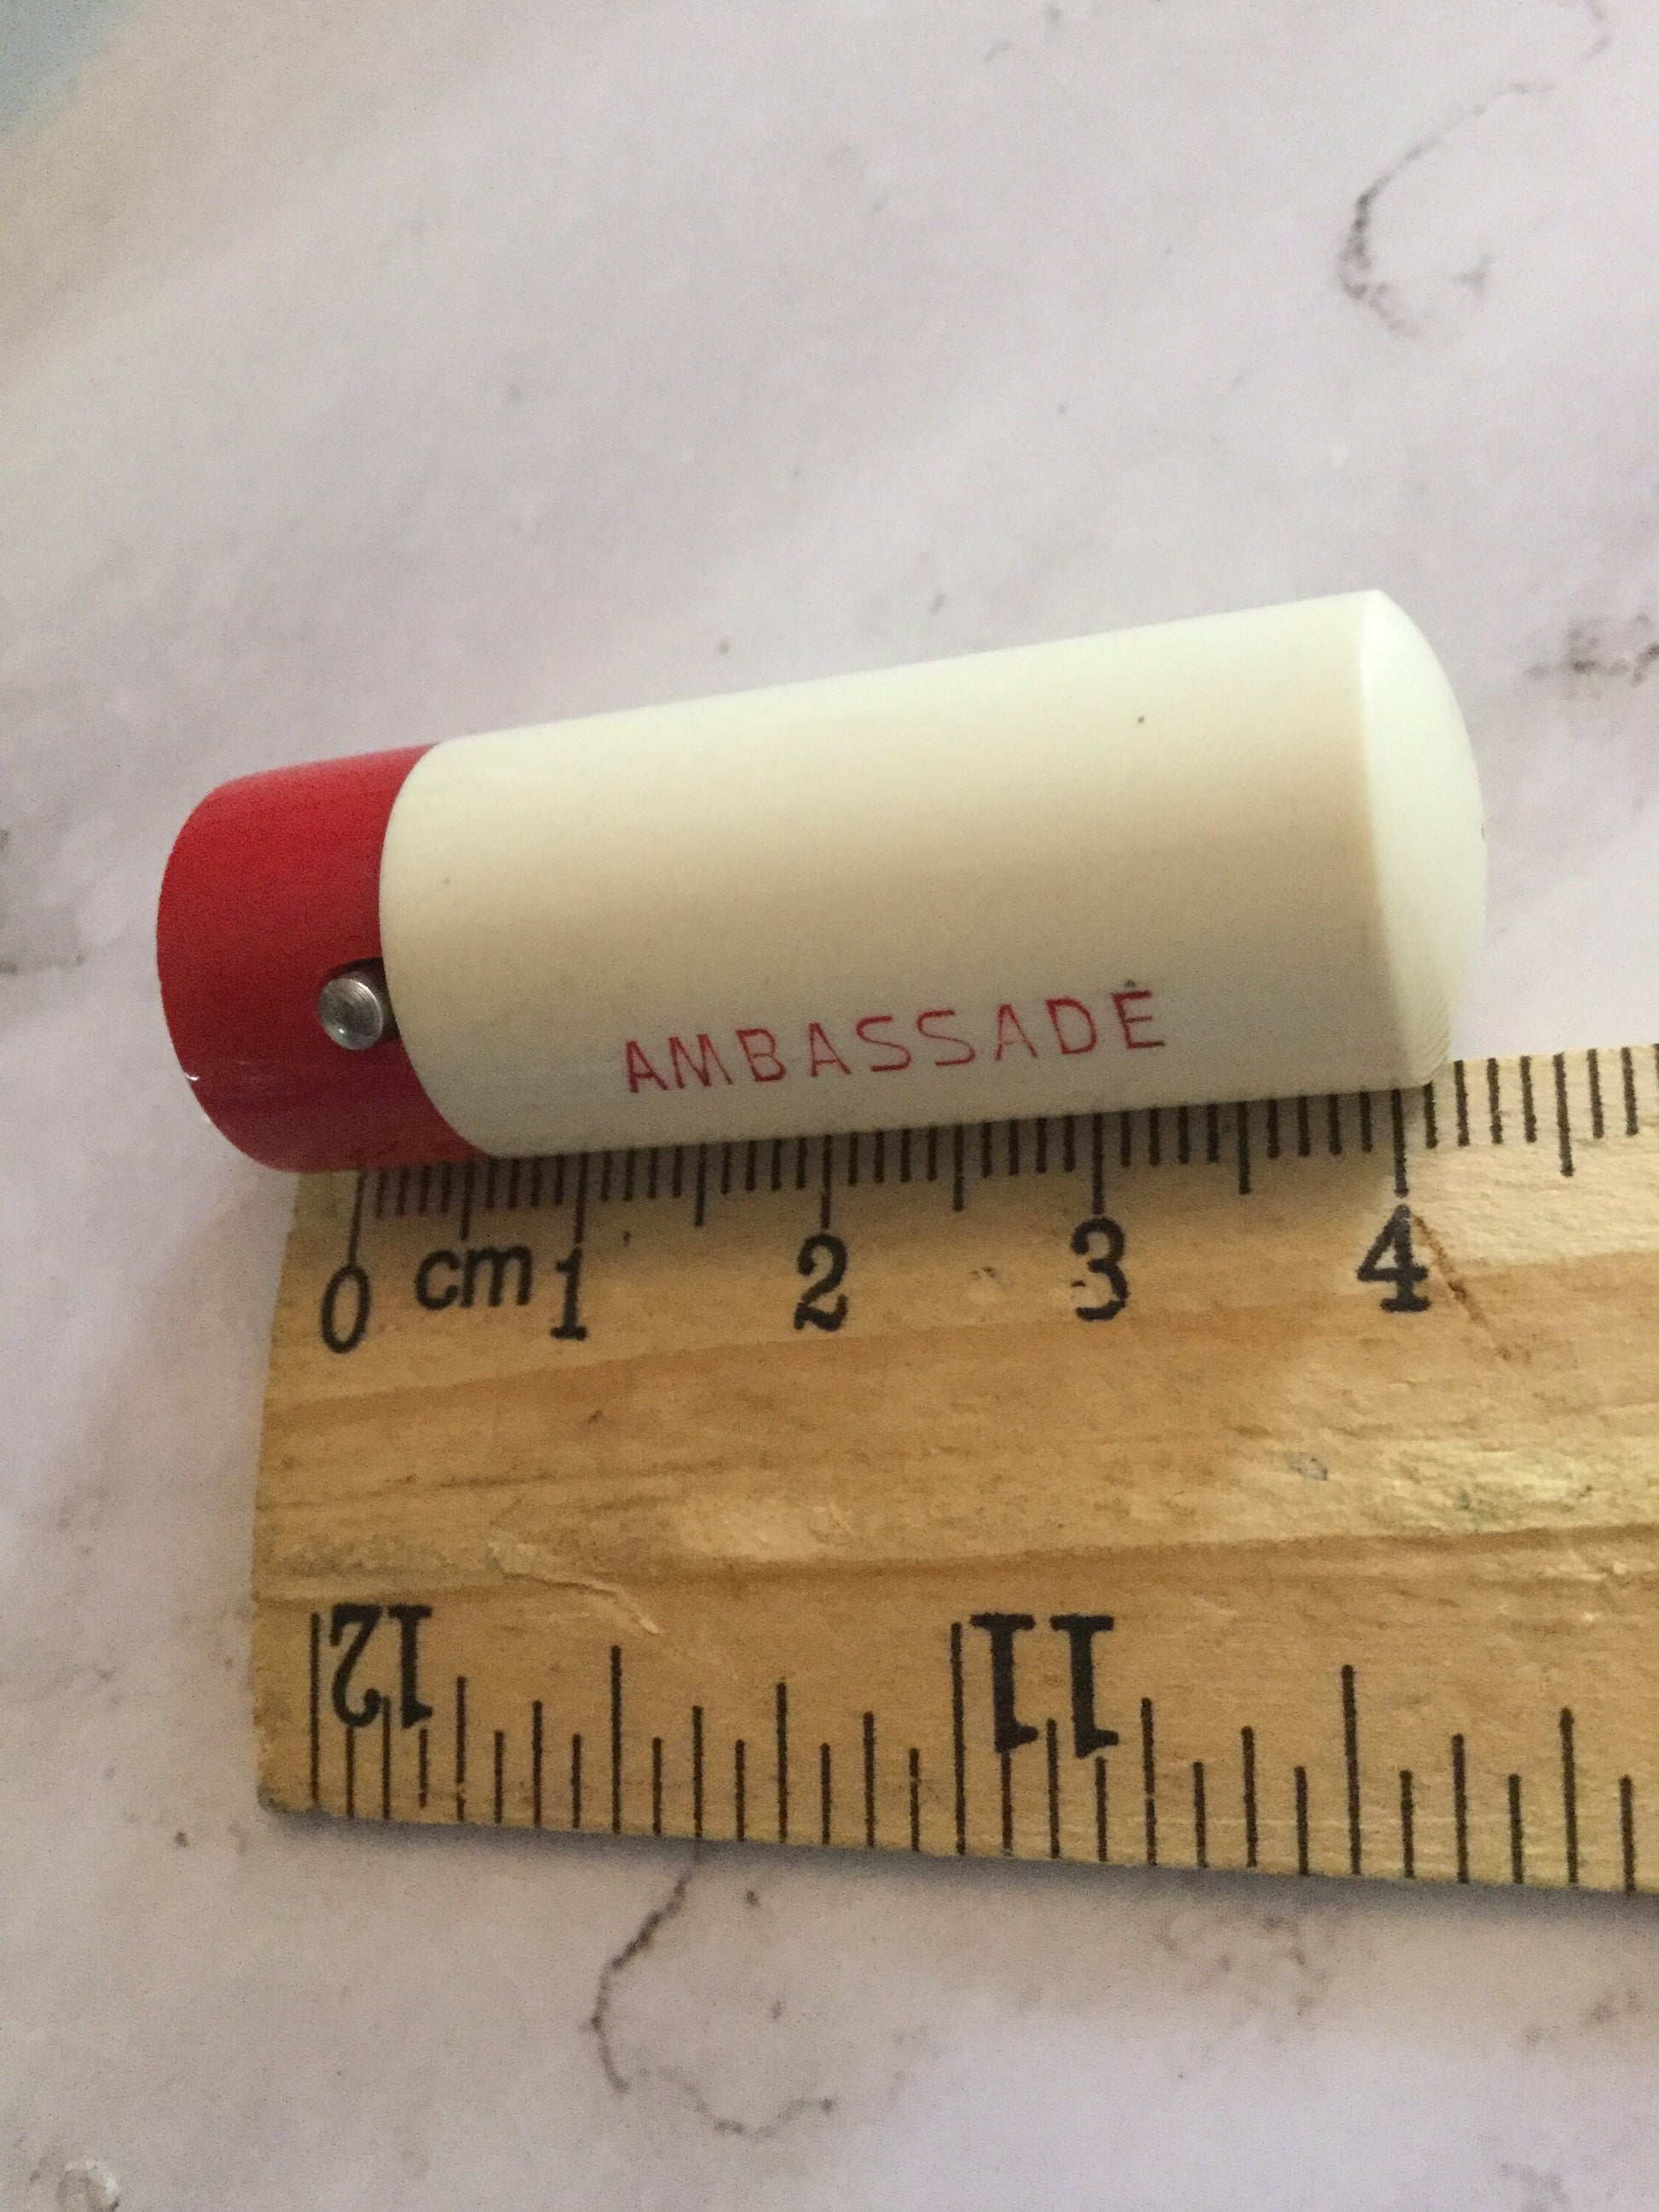 Antique vintage empty lipstick case cartridge cosmetic French AMBASSADE Paris